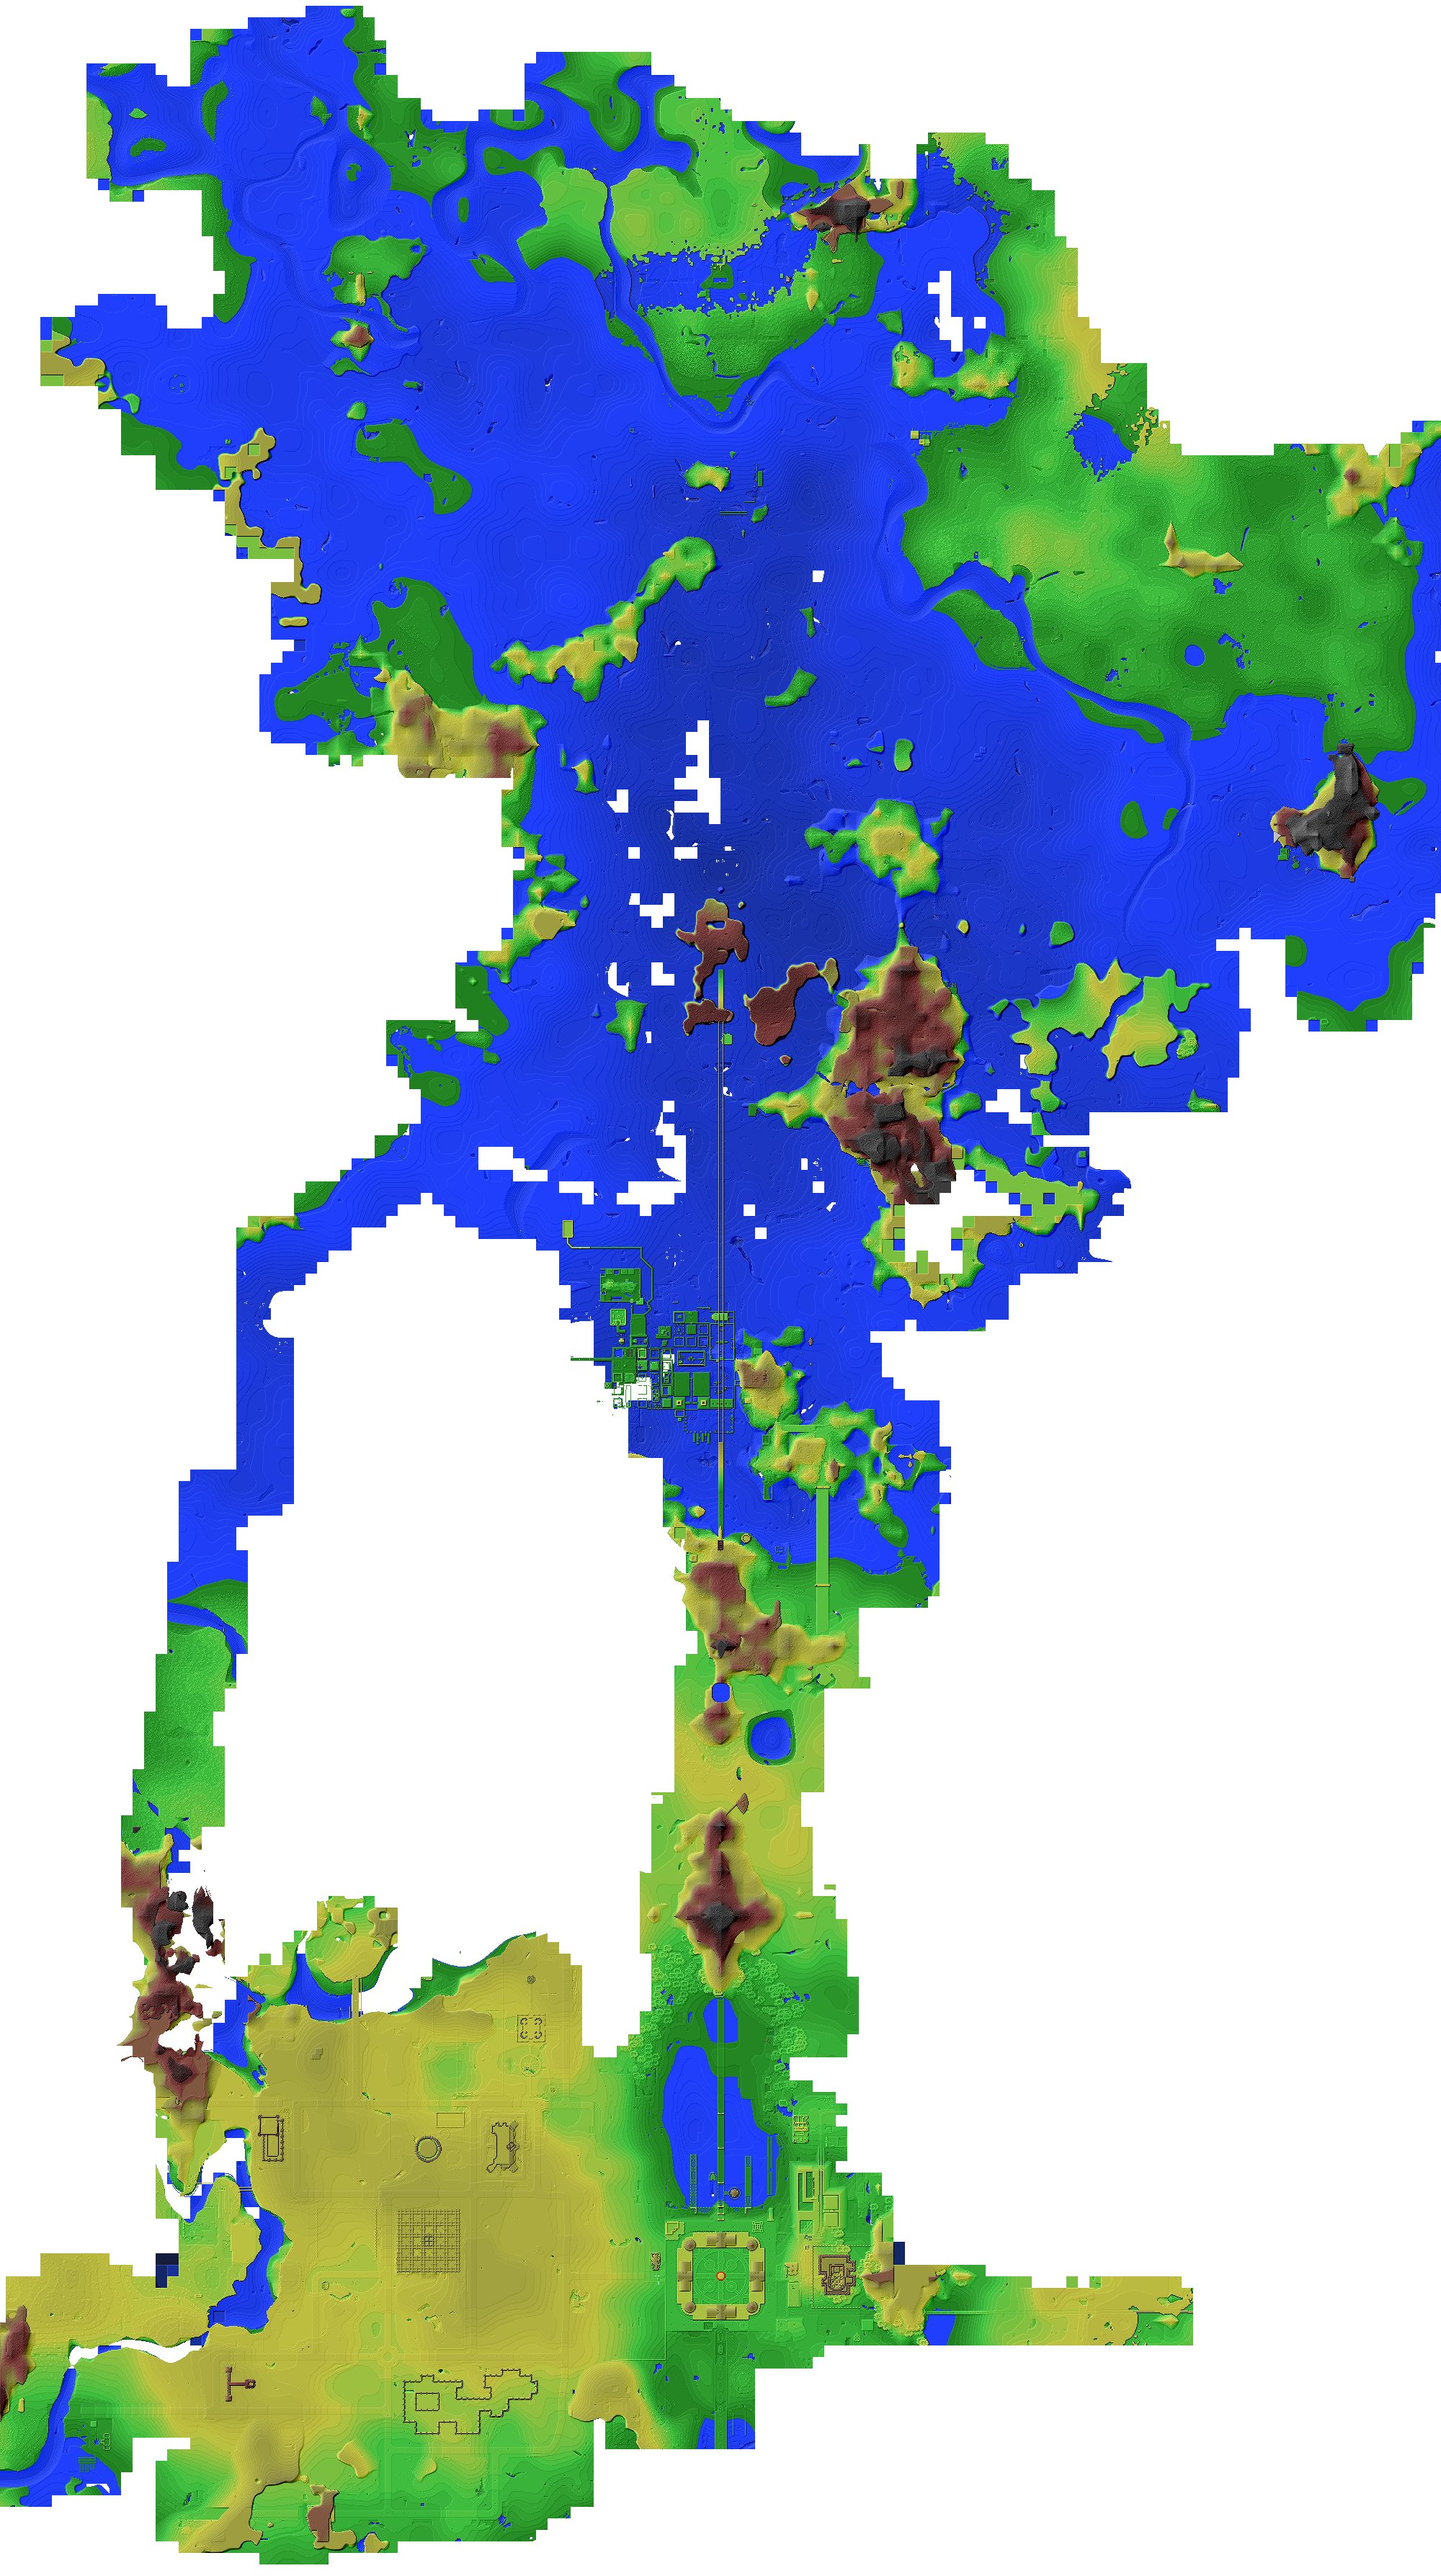 Map-server_98.166.90.48_30000-2016-07-09.jpg